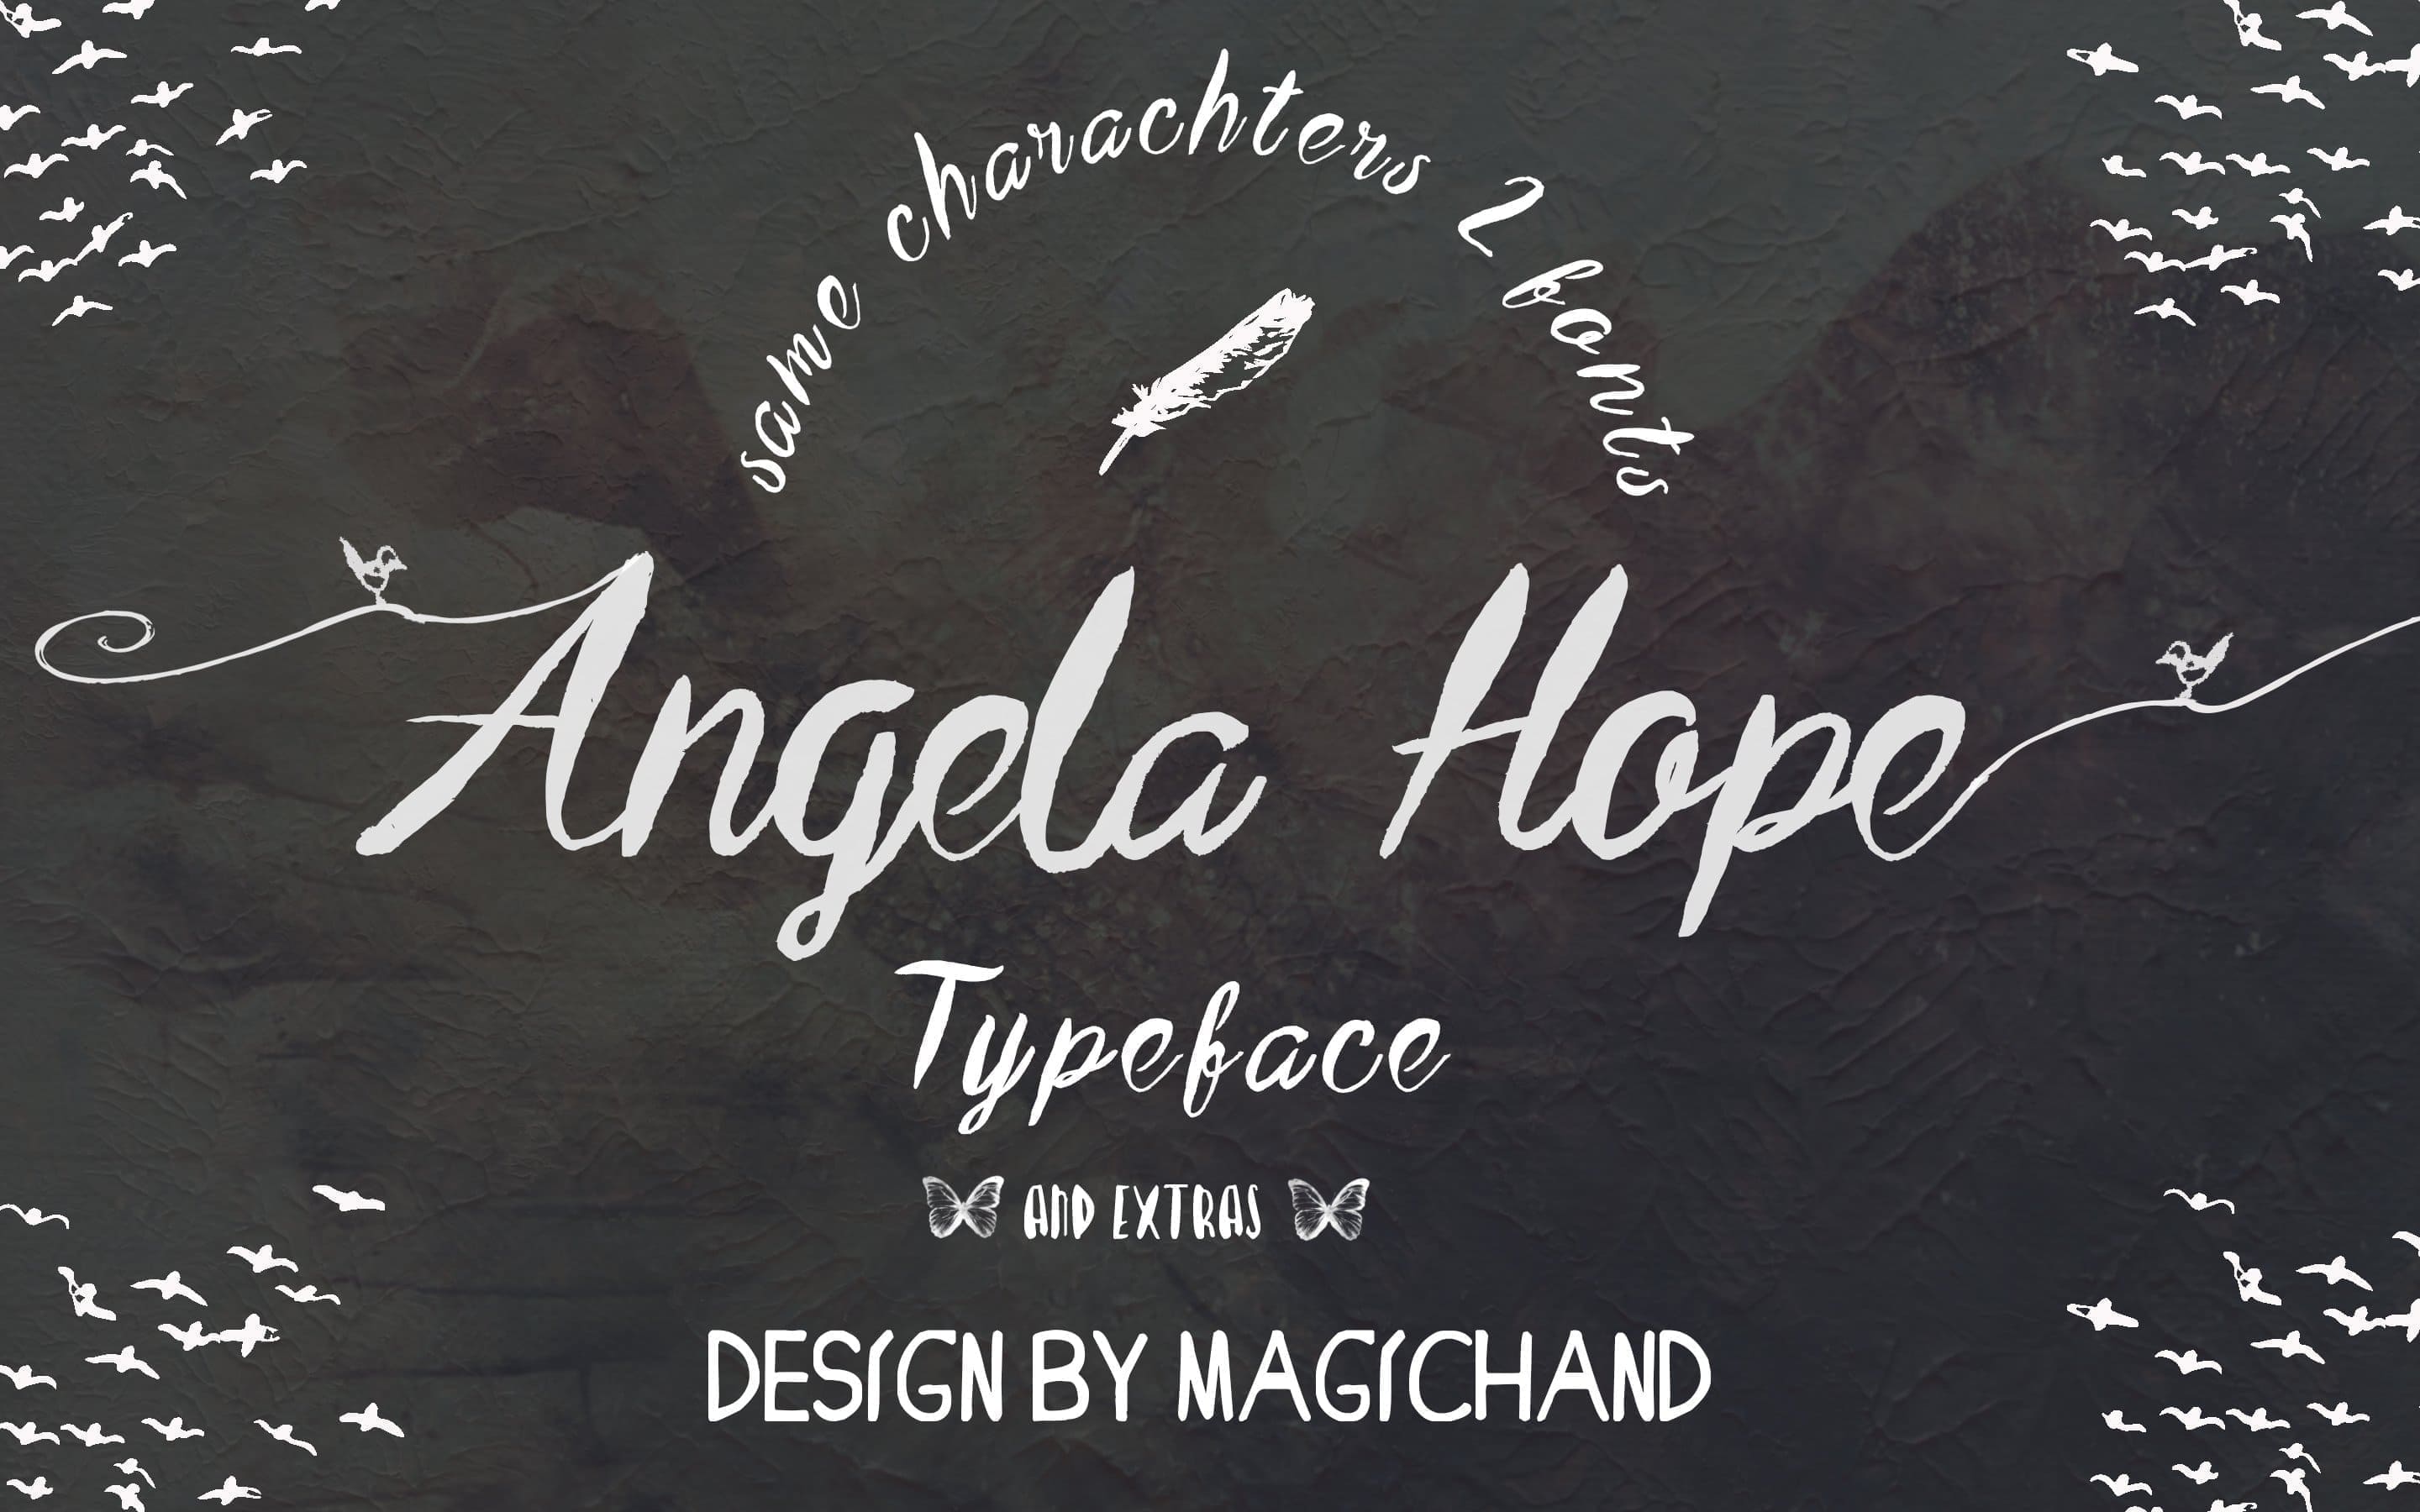 Angela hope, main picture.